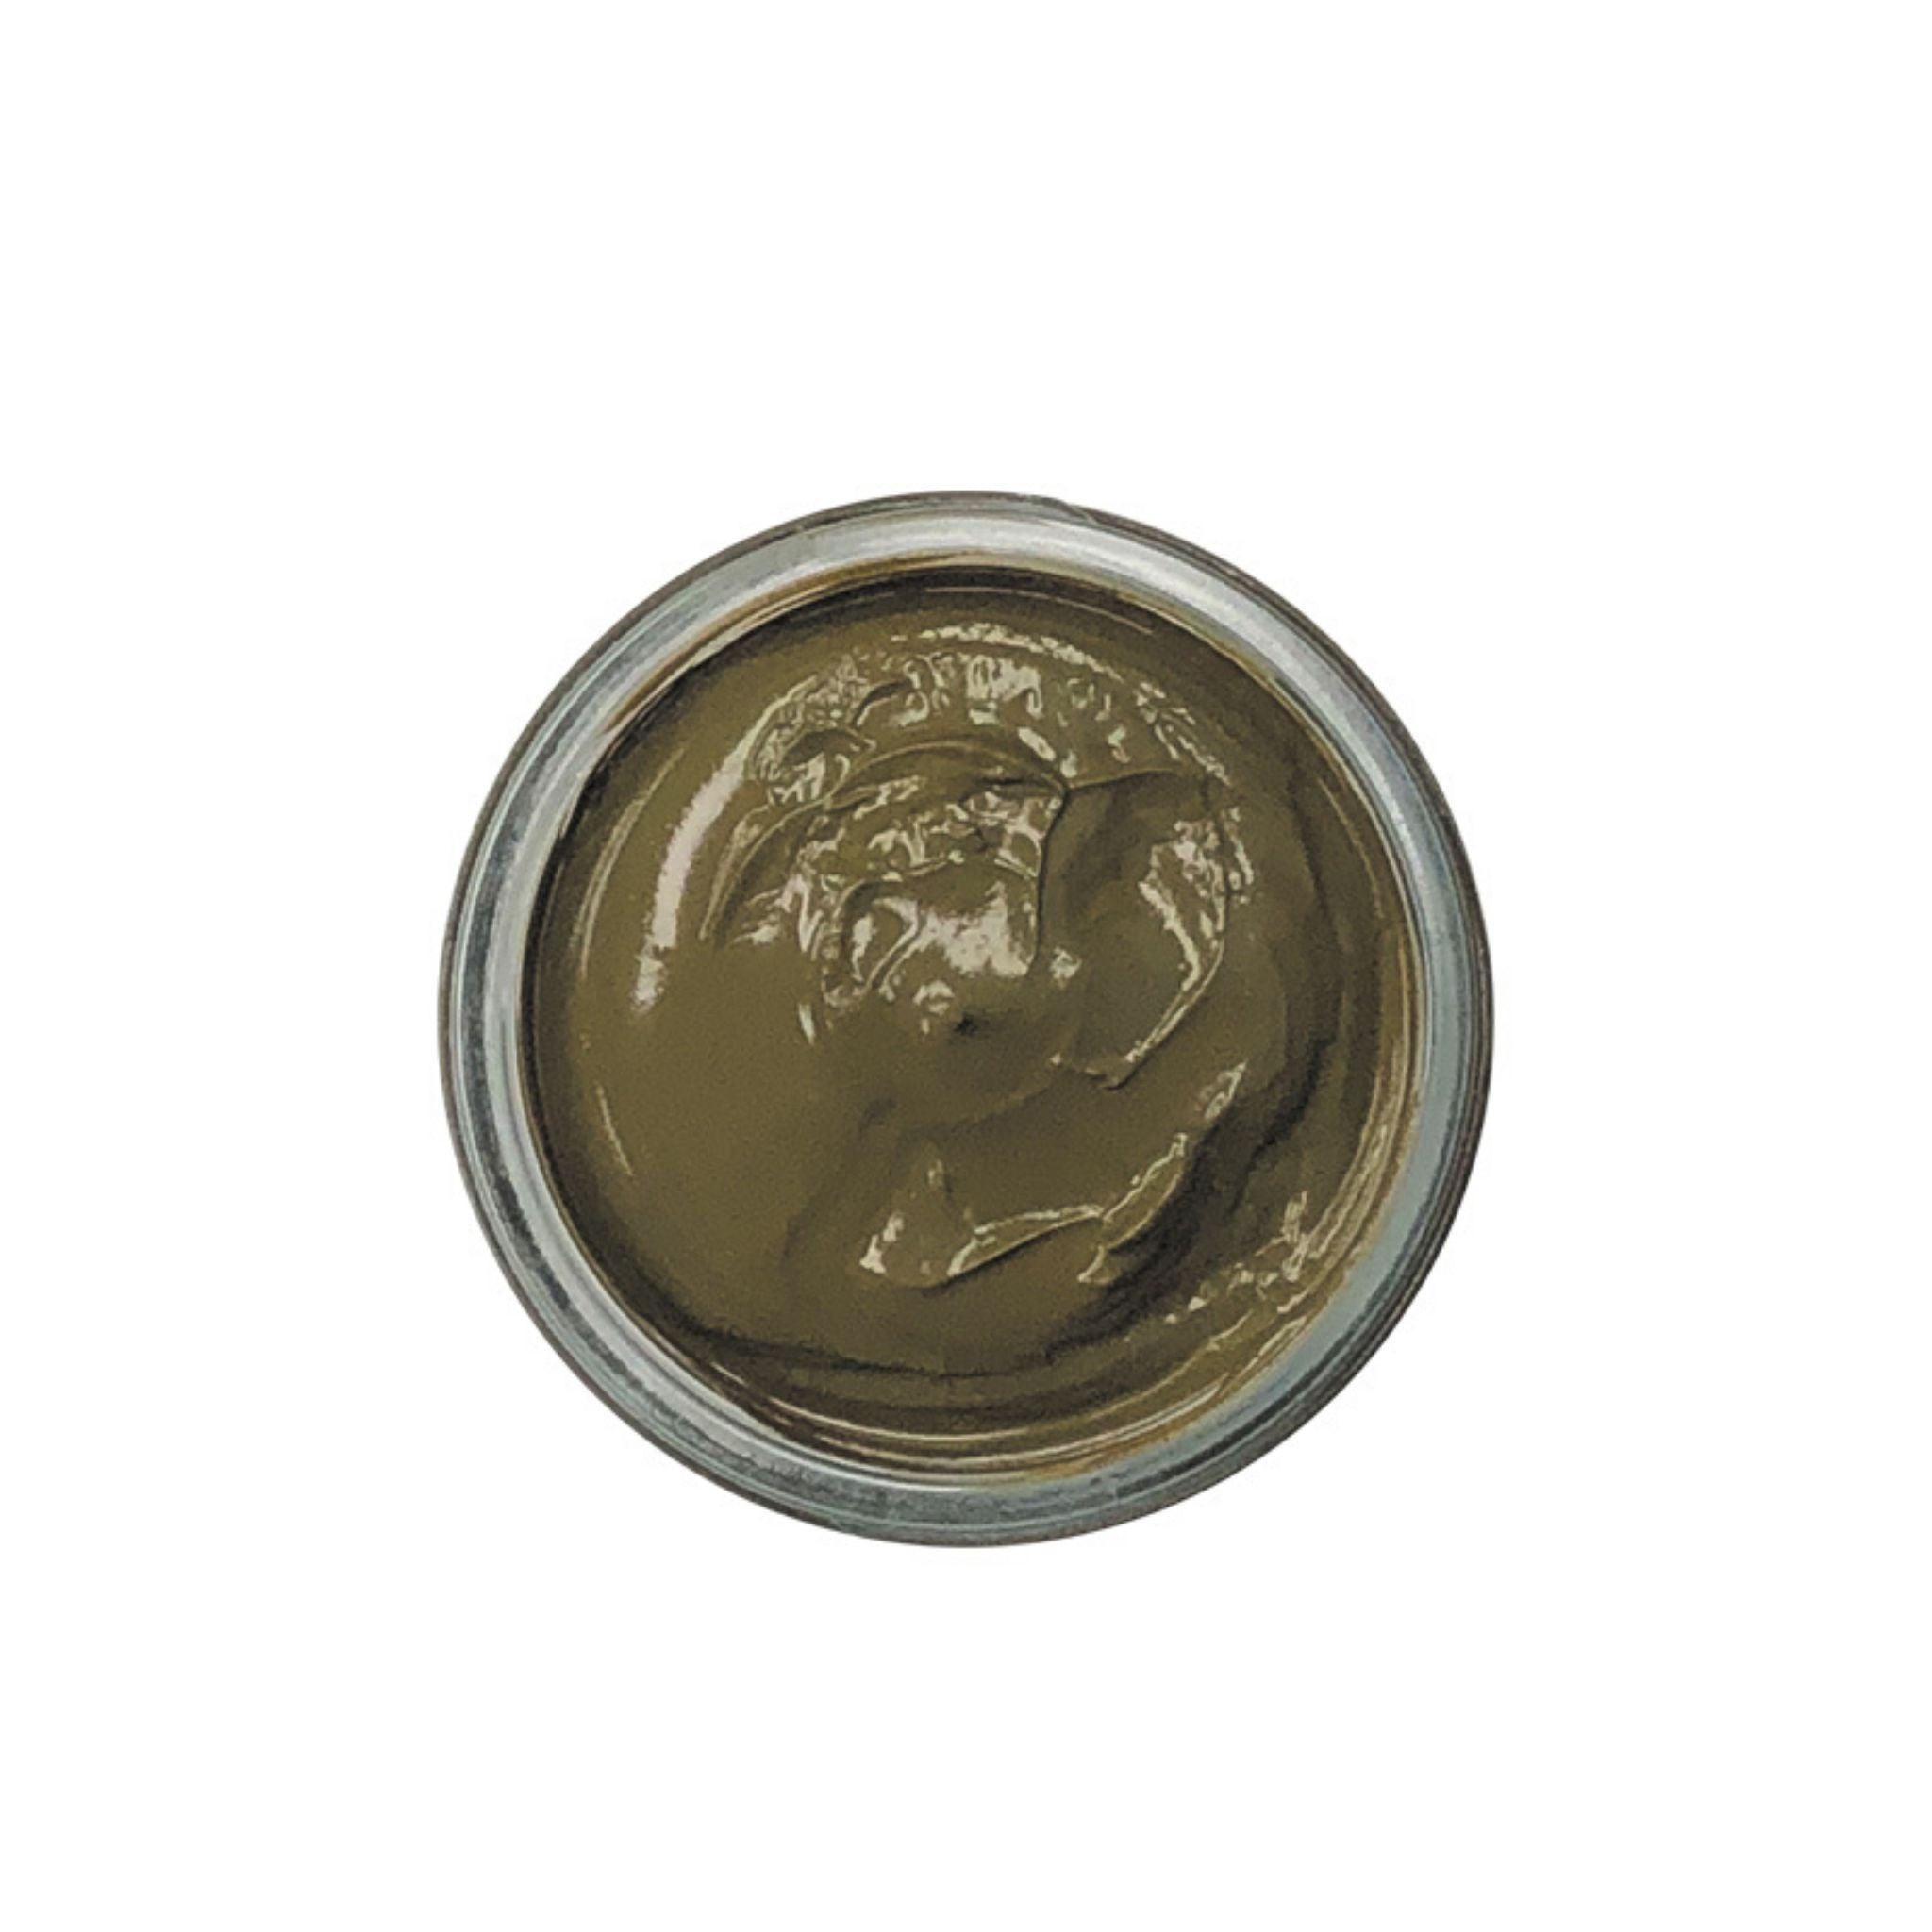 Olive Green shoe cream polish in clear jar